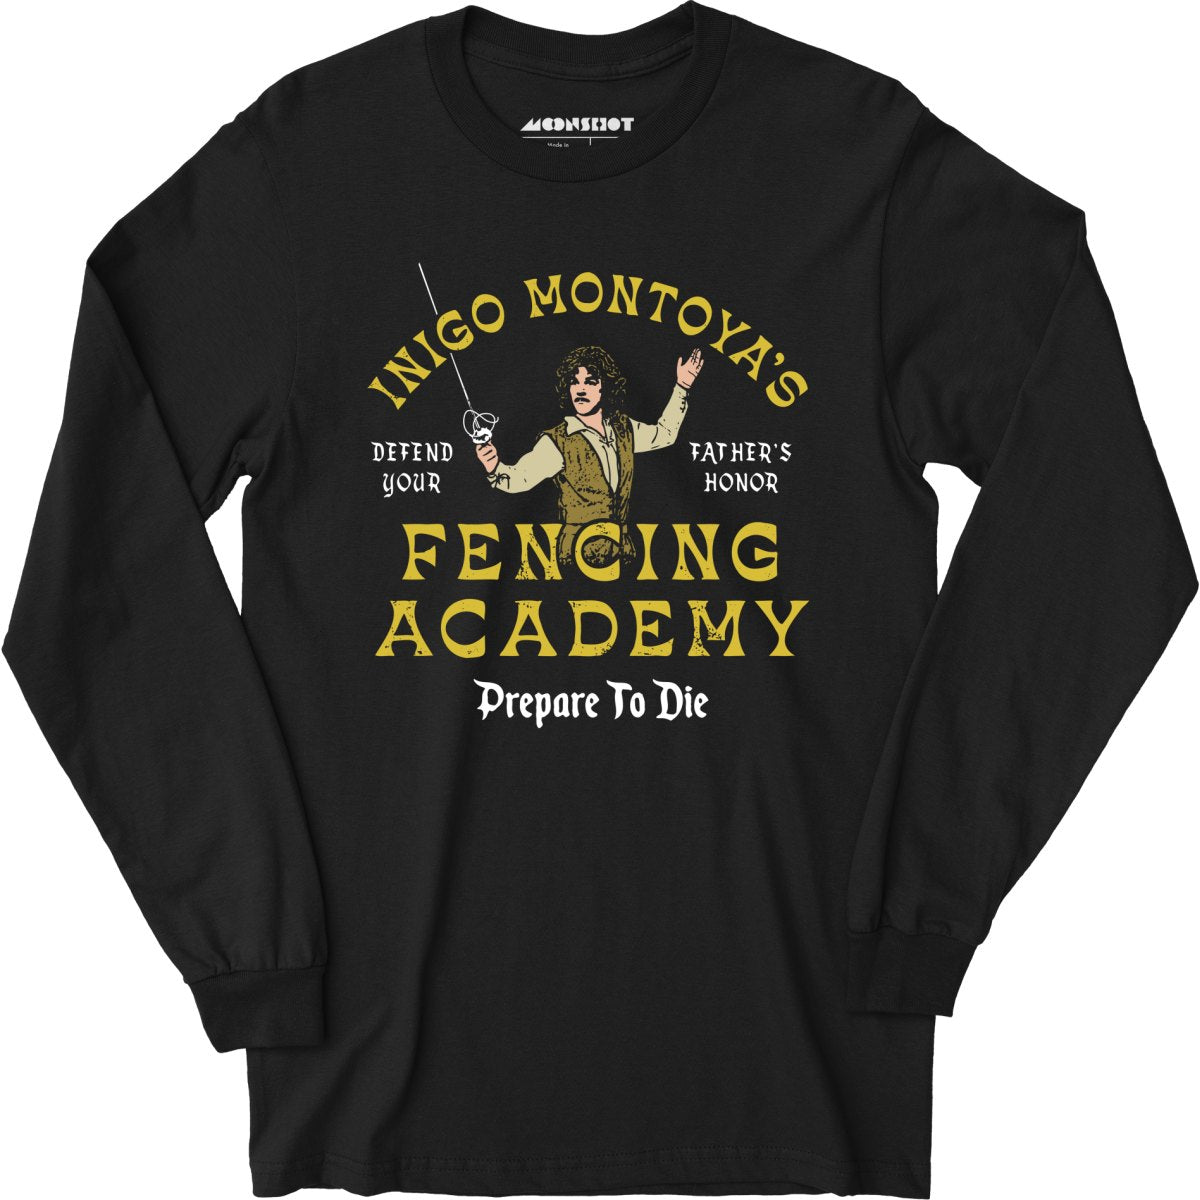 Inigo Montoya's Fencing Academy - Long Sleeve T-Shirt